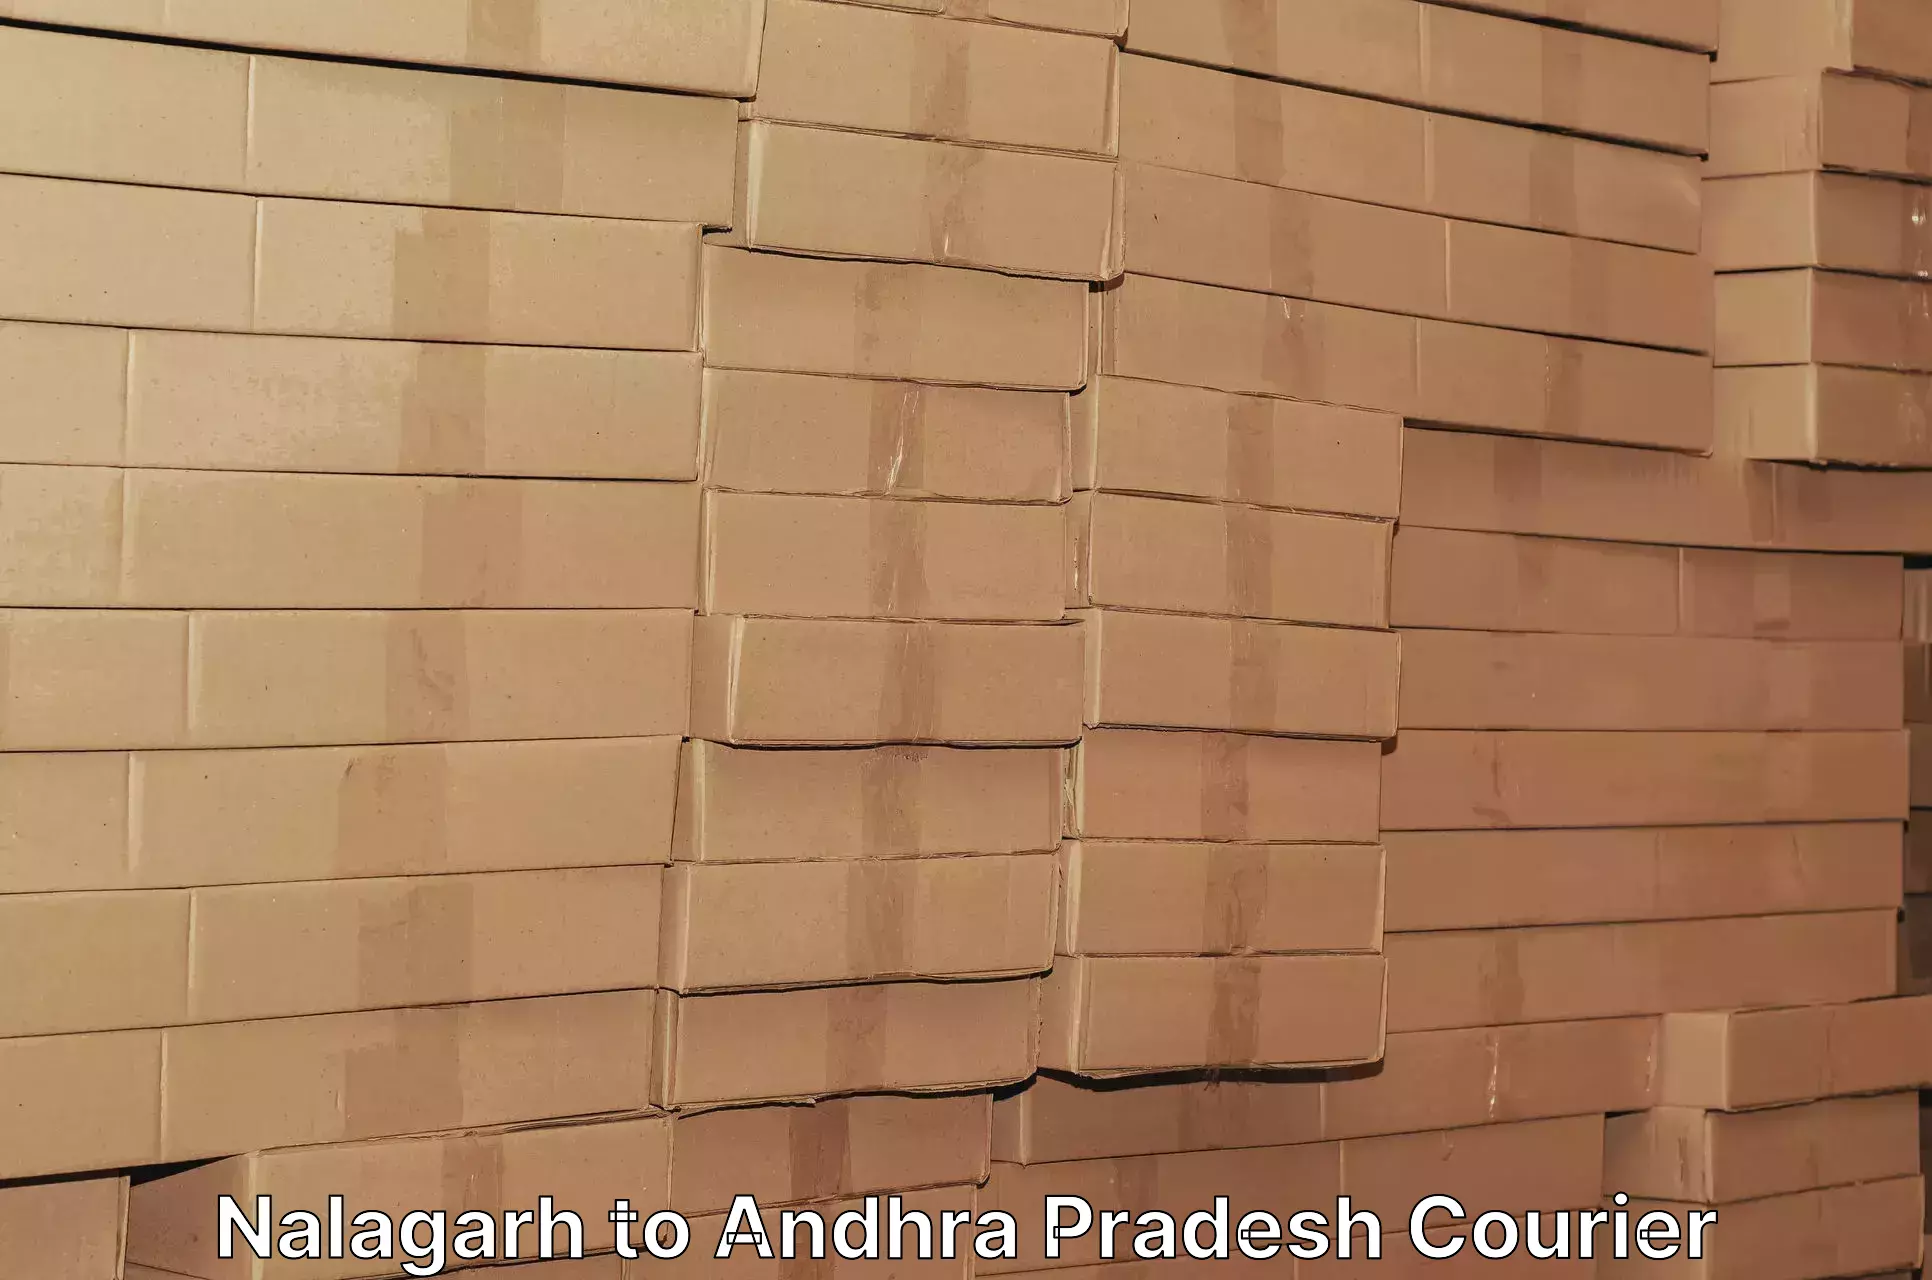 Efficient order fulfillment in Nalagarh to Andhra Pradesh